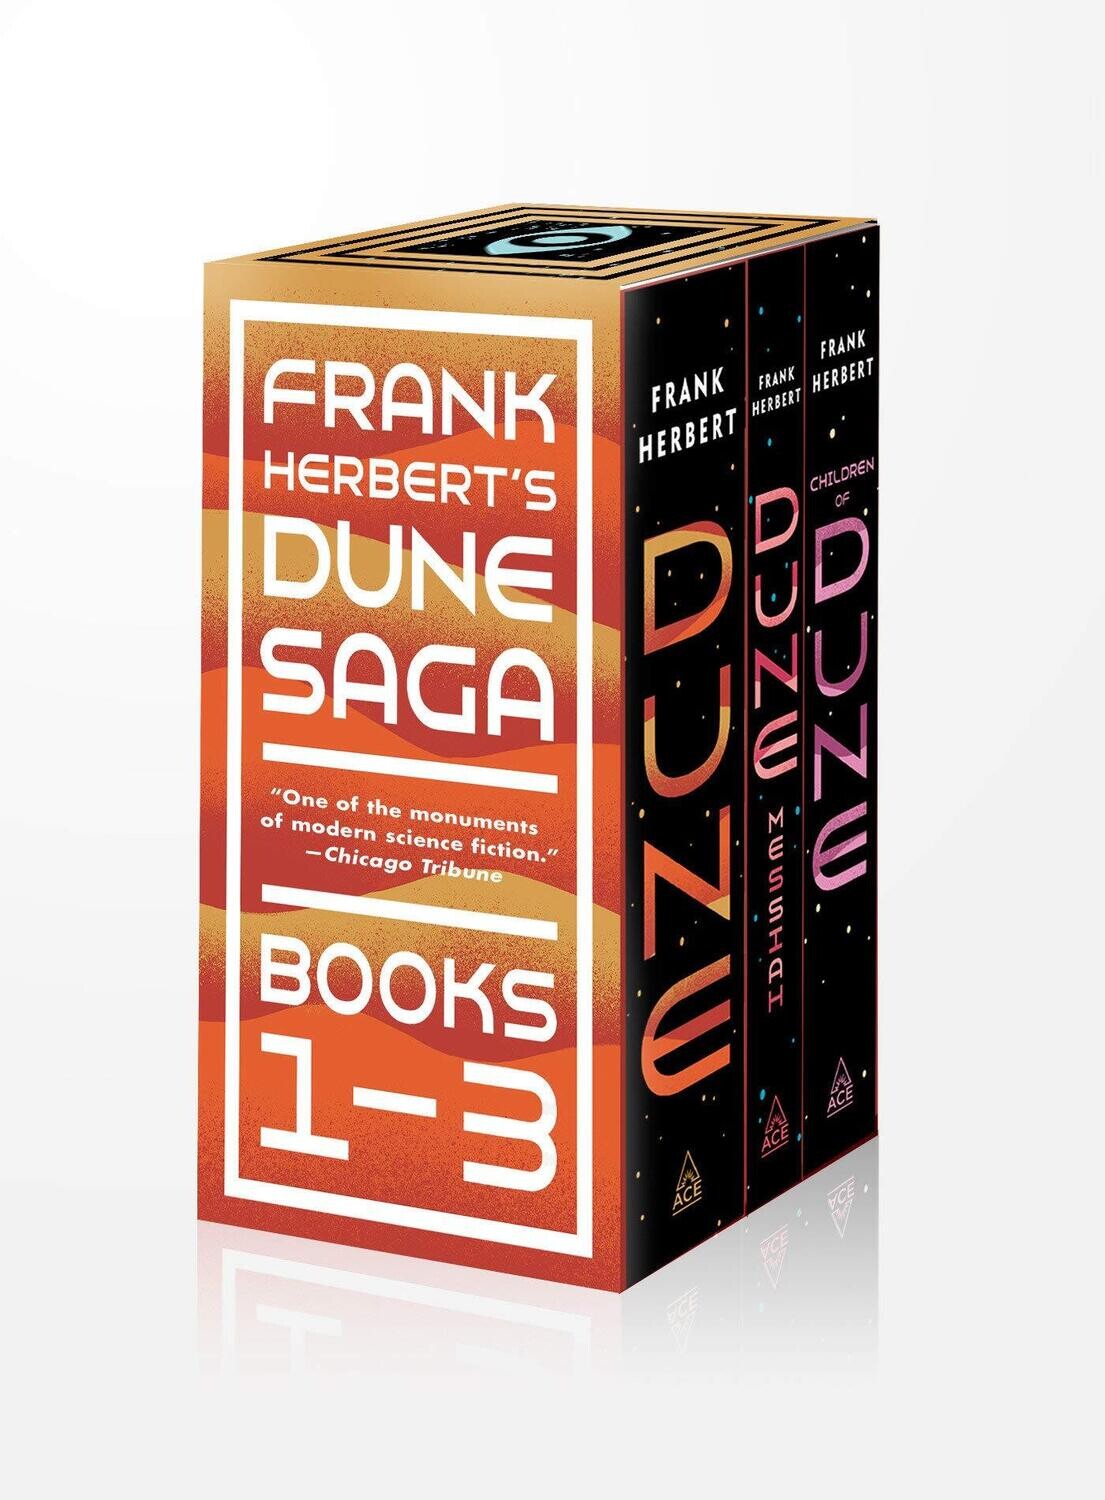 Frank Herbert's Dune Saga 3-Book Boxed Set: Dune, Dune Messiah, and Children of Dune (Paperback, NEW)